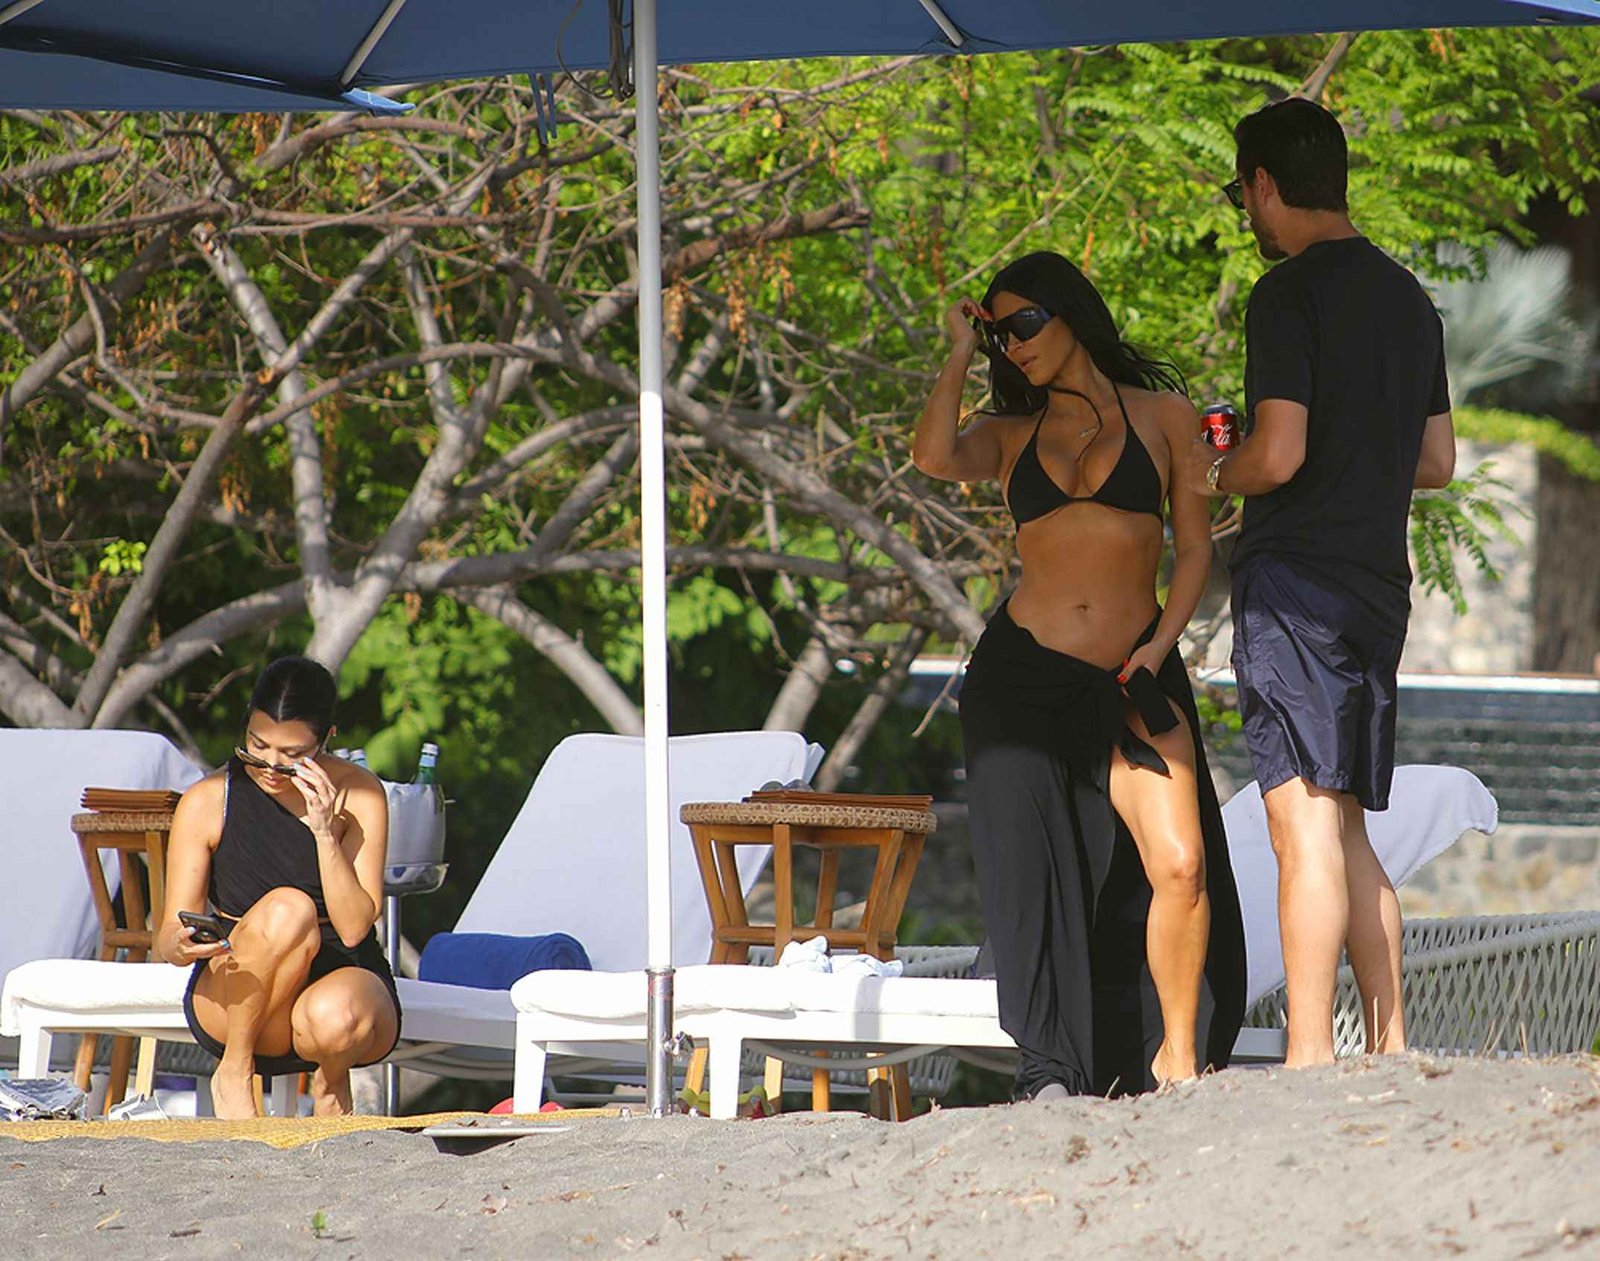 Kim et Kourtney Kardashian en bikini au Costa Rica